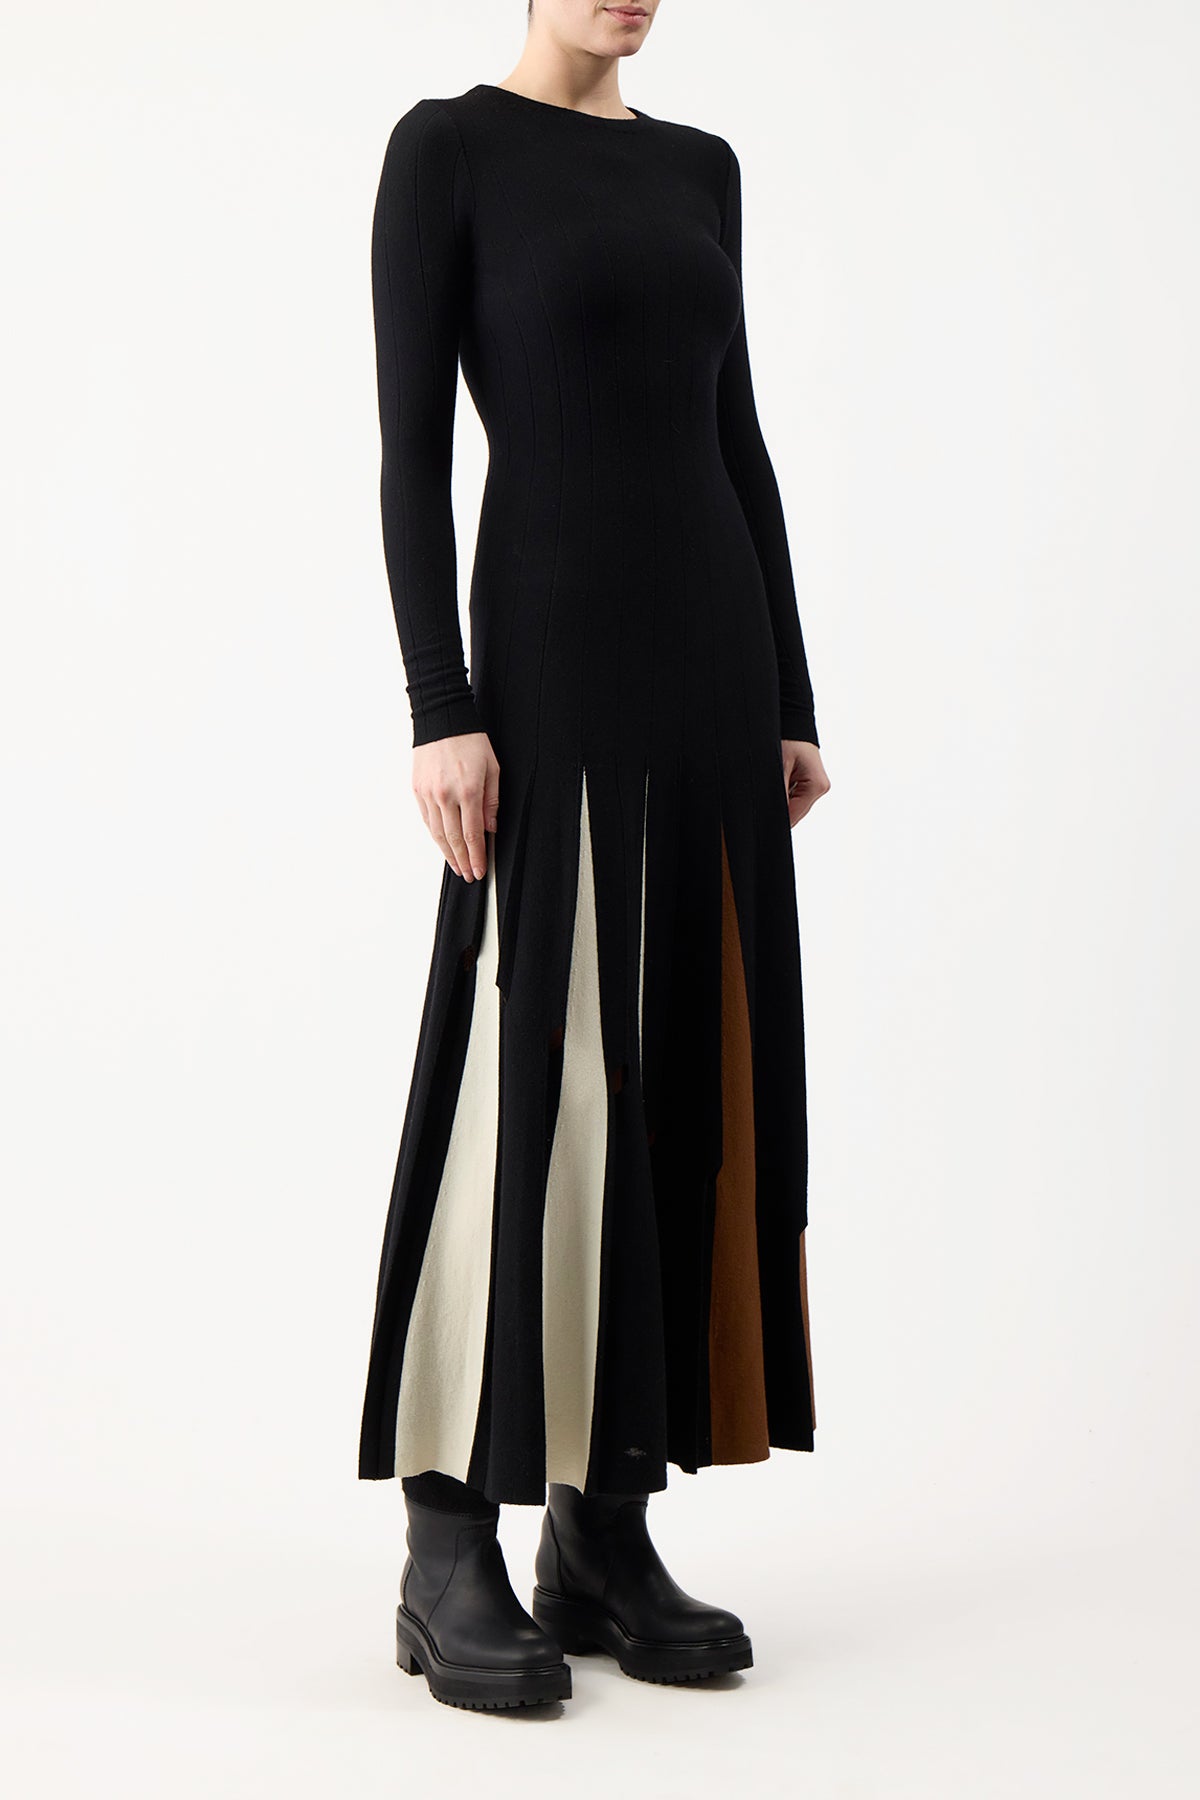 Ottavia Pleated Dress in Merino Wool